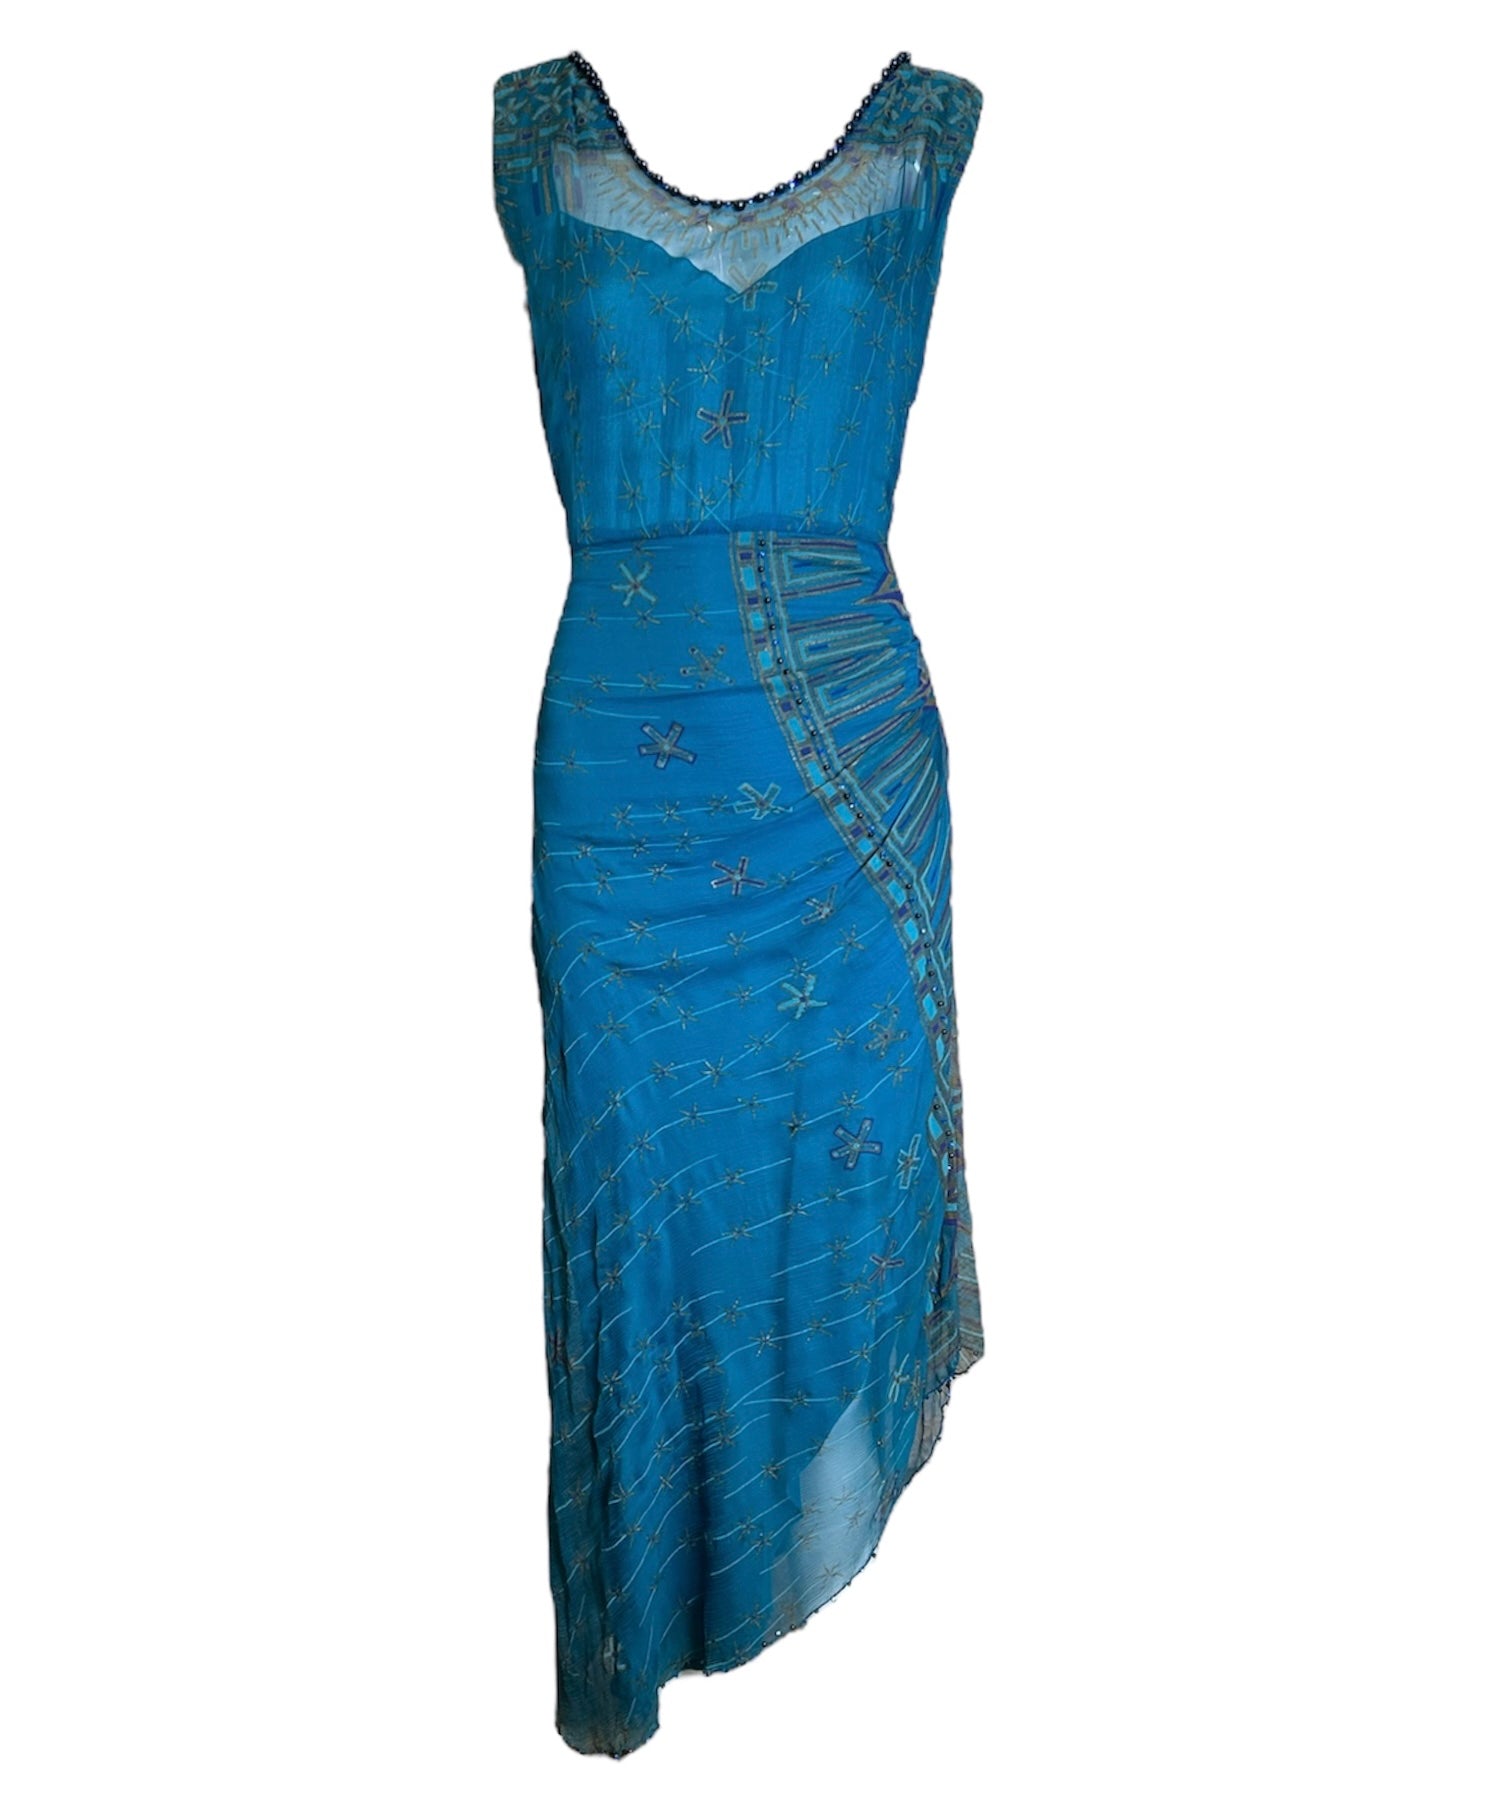 Zandra Rhodes 1970s Silk Turquoise Silk Screen Dress FRONT PHOTO 1 OF 7